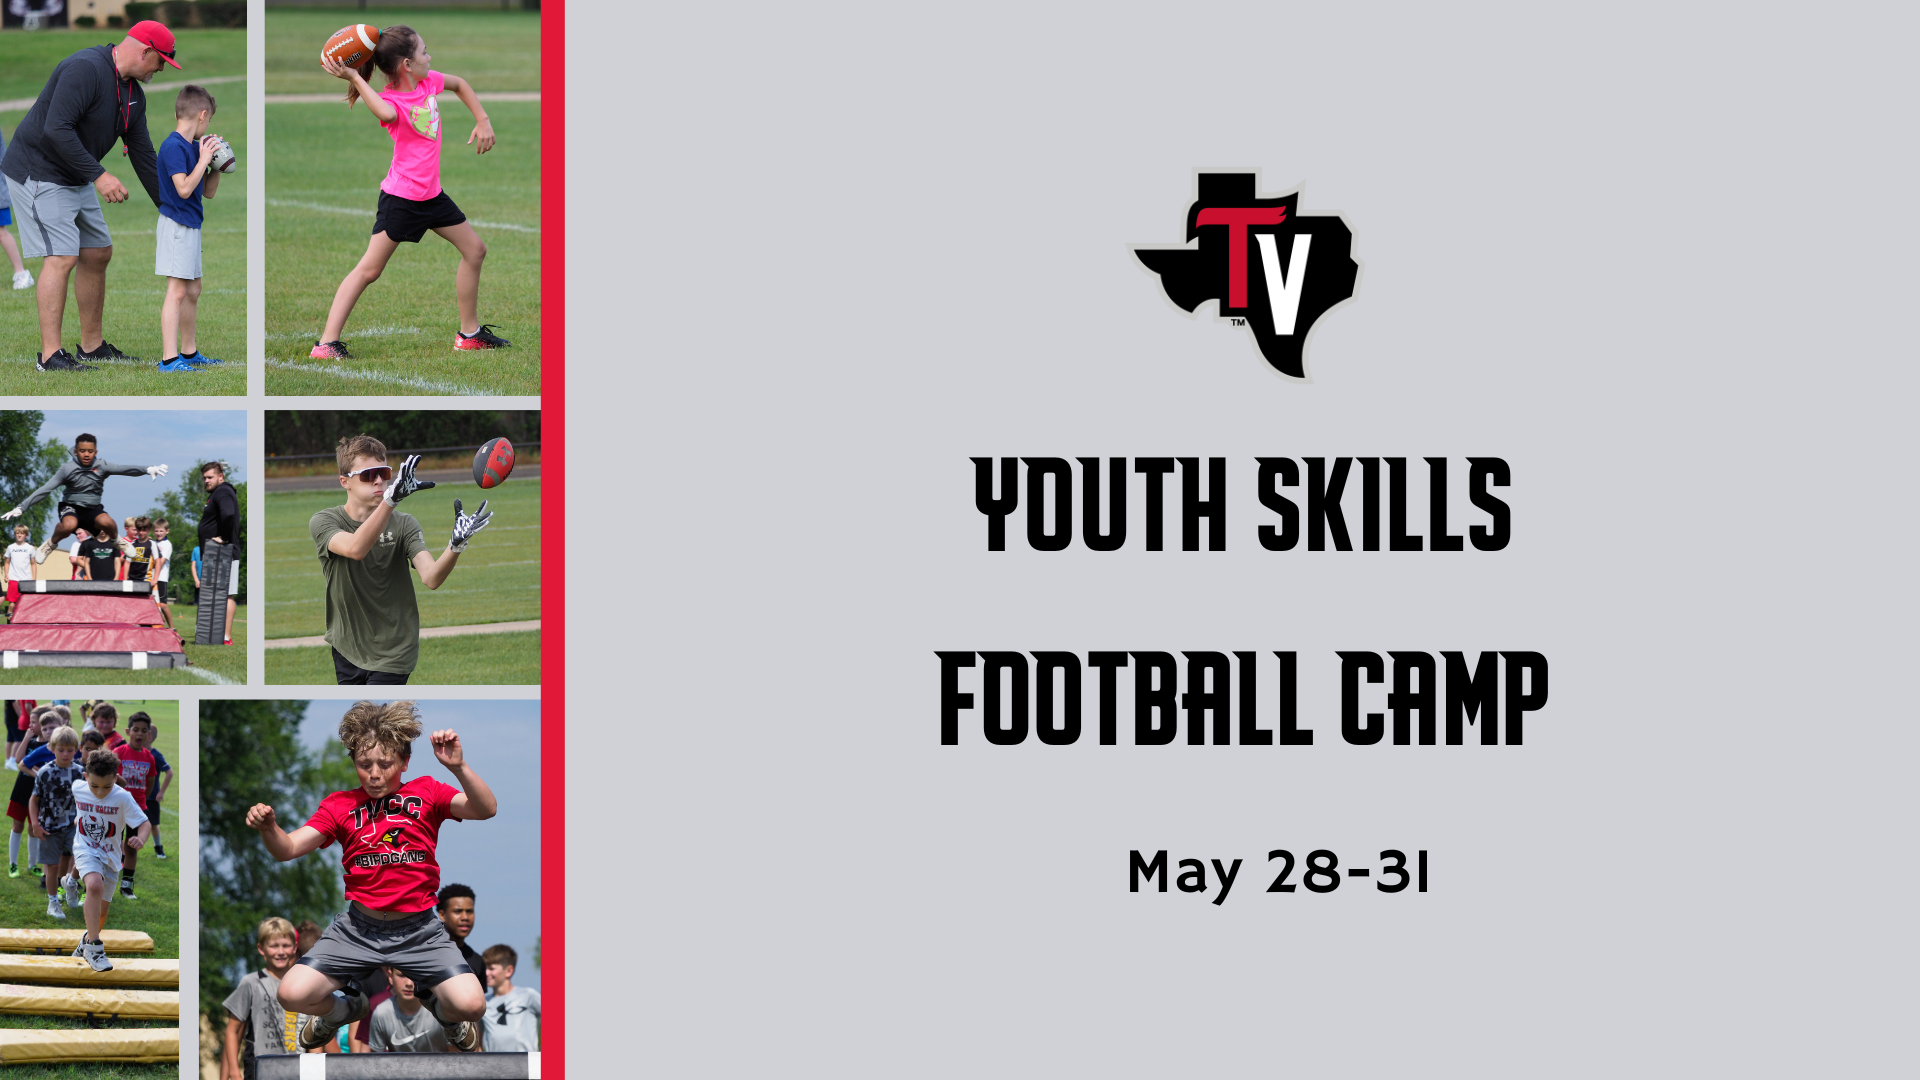 HERE COMES CAMP: Youth Skills Camp set May 28-31